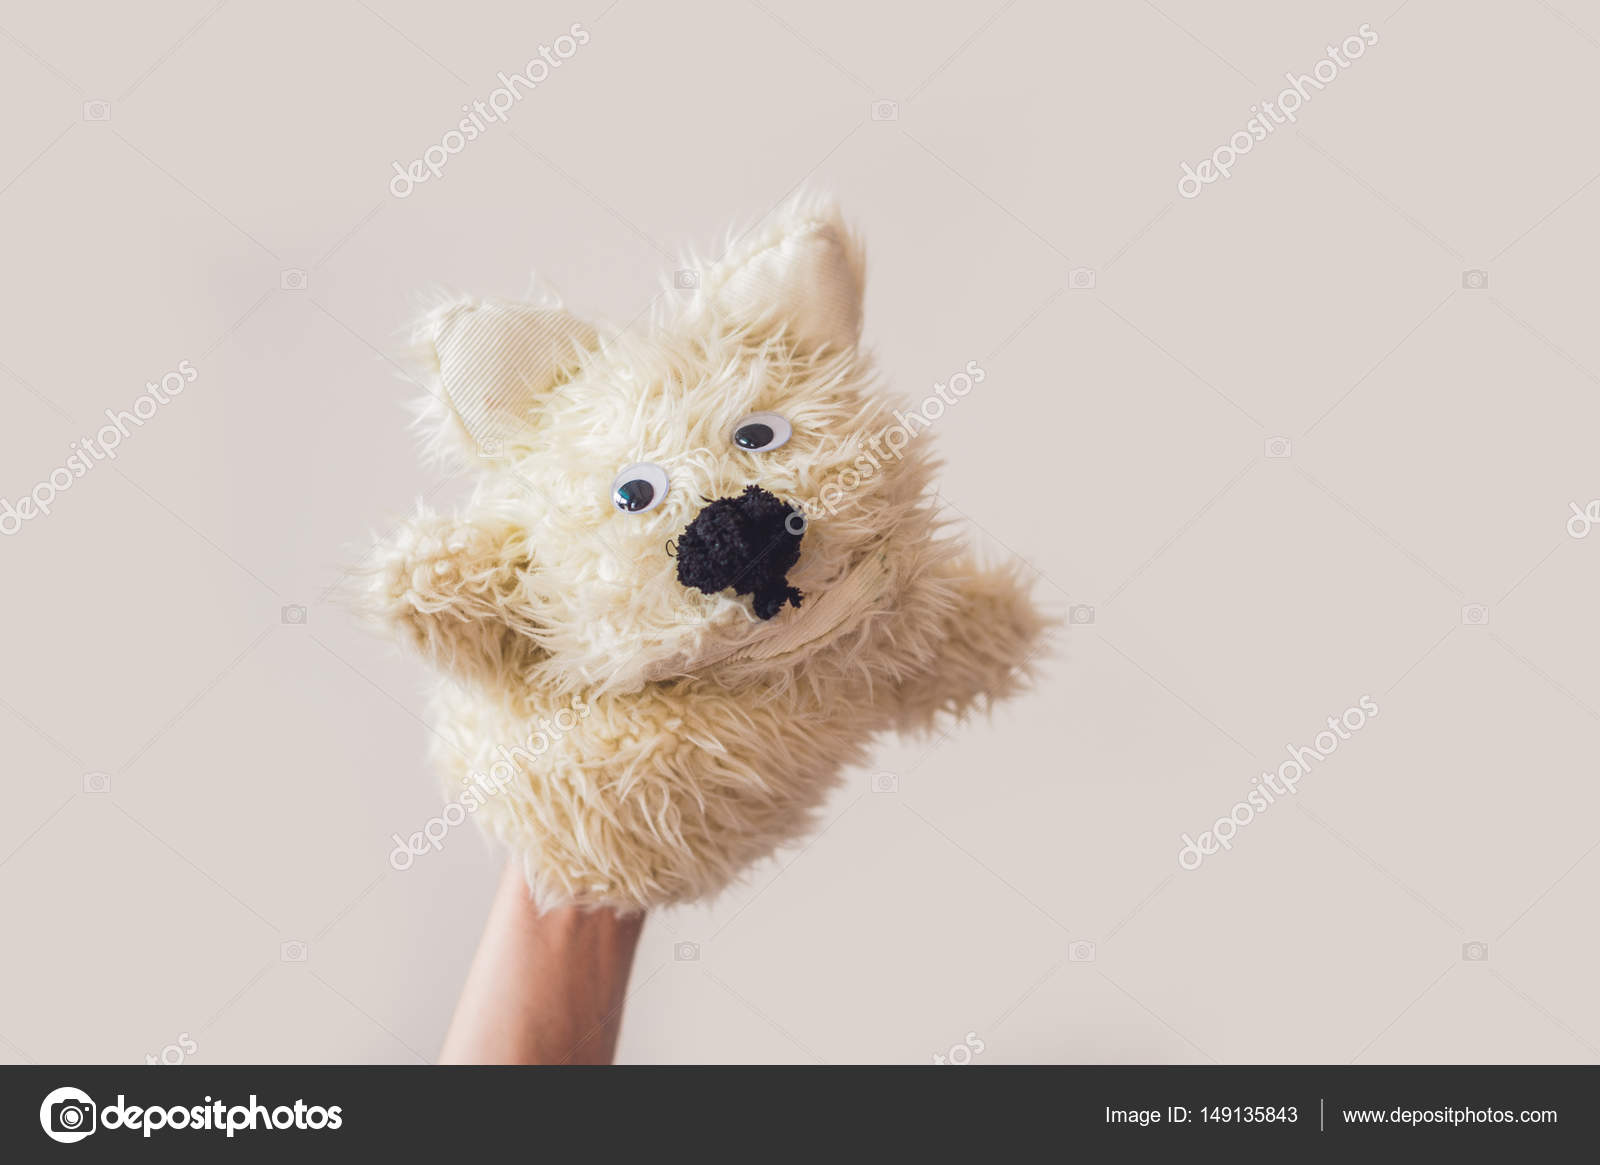 https://st3.depositphotos.com/8509220/14913/i/1600/depositphotos_149135843-stock-photo-puppet-show-dog.jpg